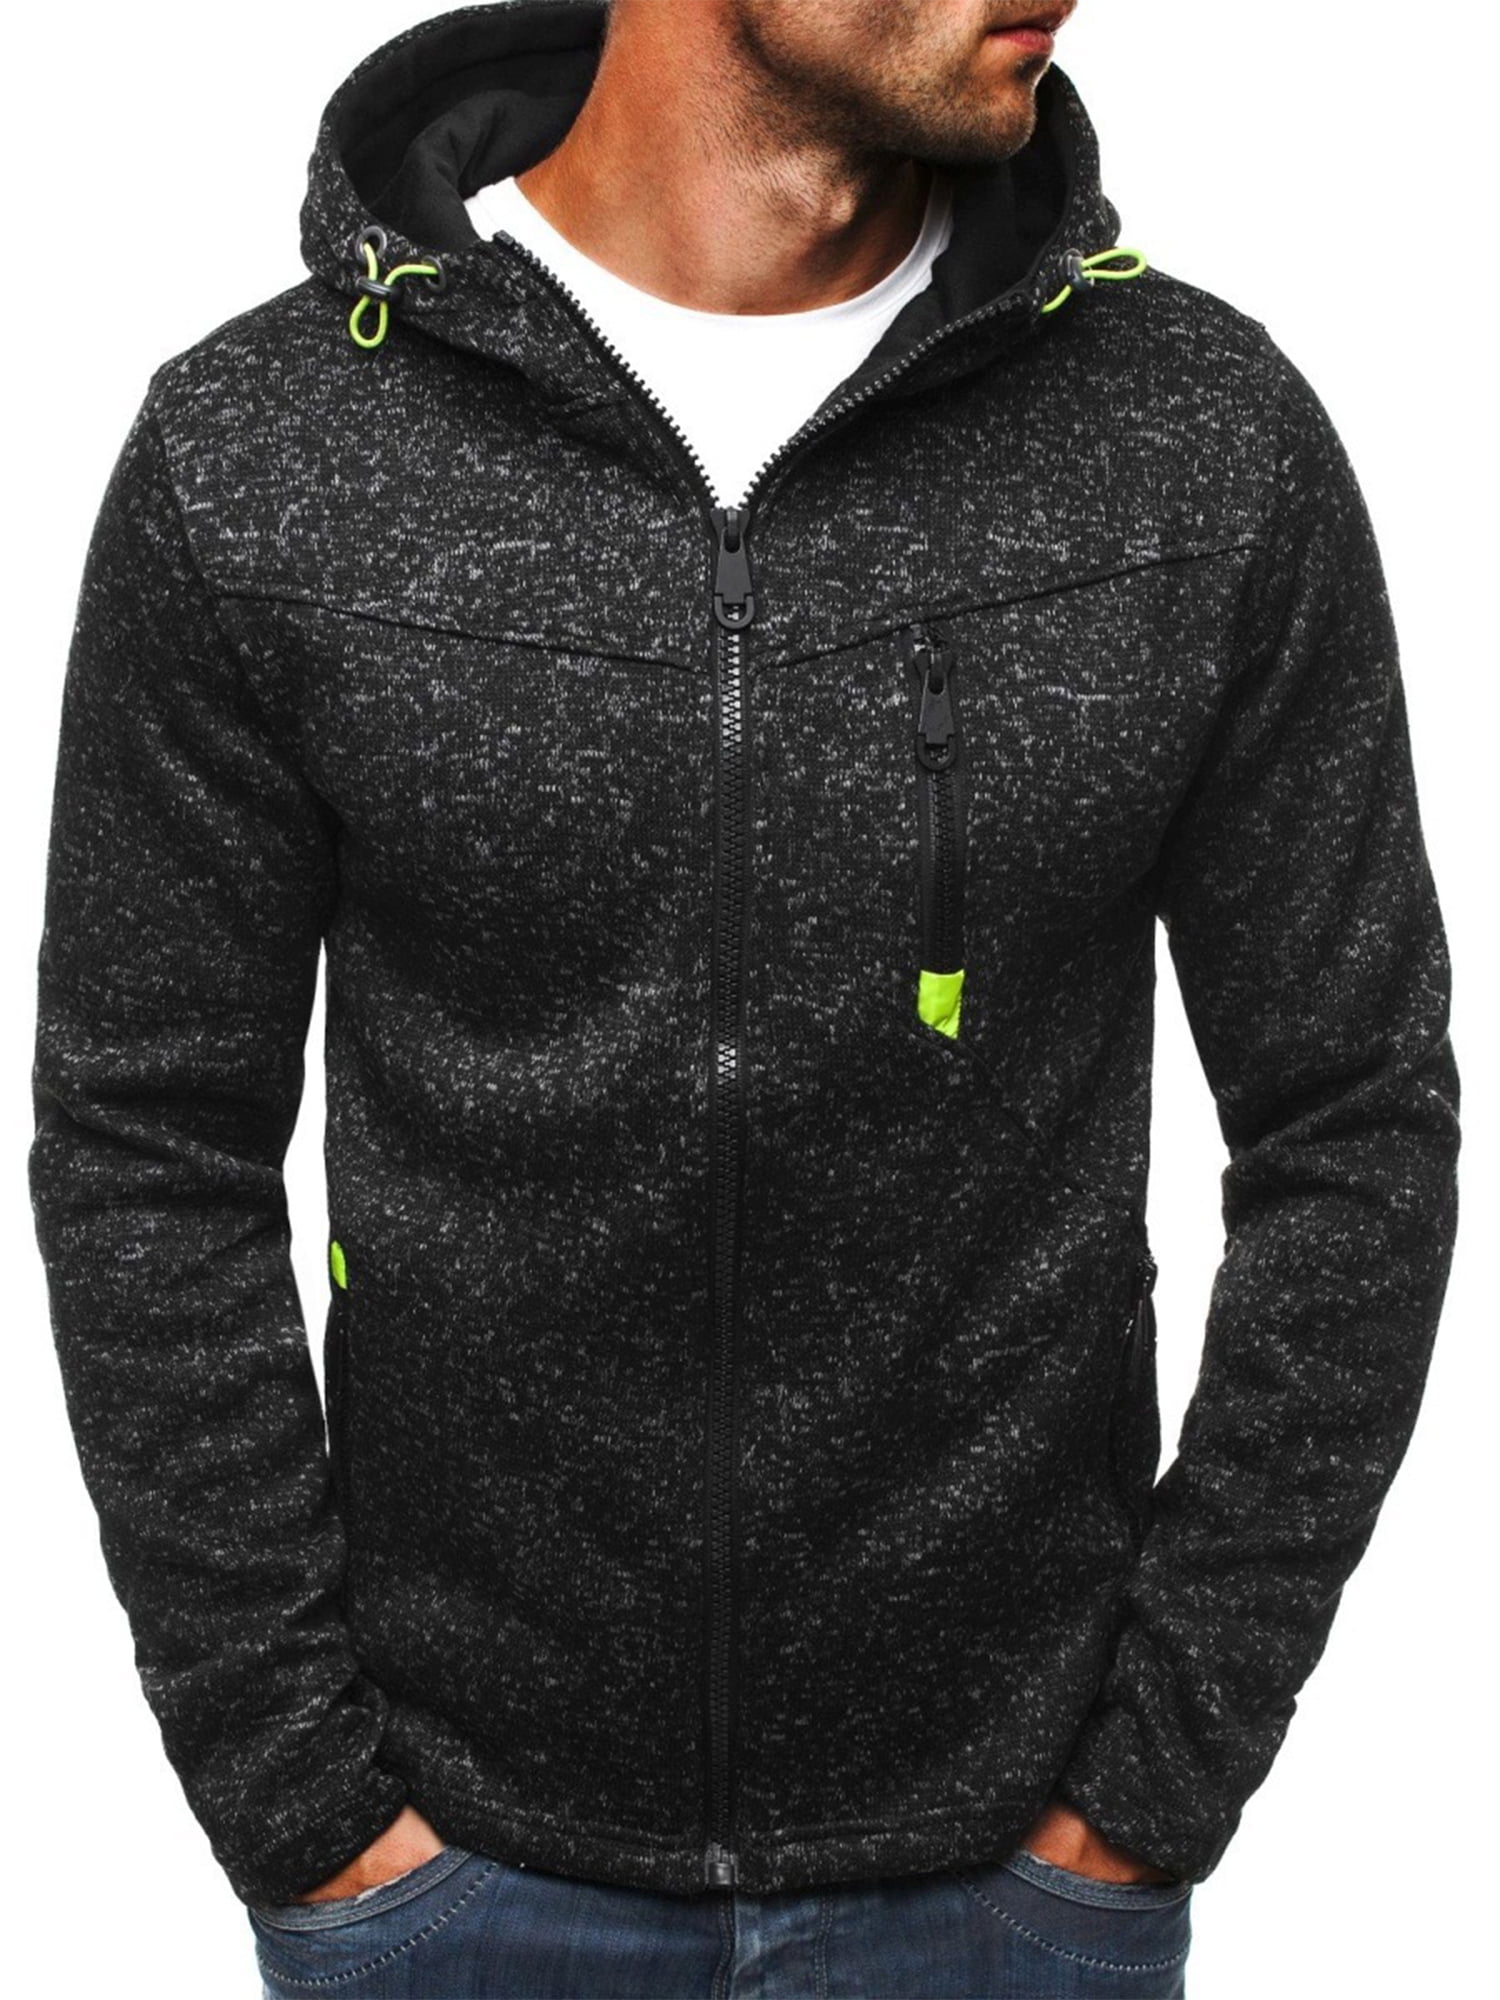 WSPLYSPJY Mens Hoodies Zipper Hooded Workout Leisure Solid Sweatshirt Jackets 